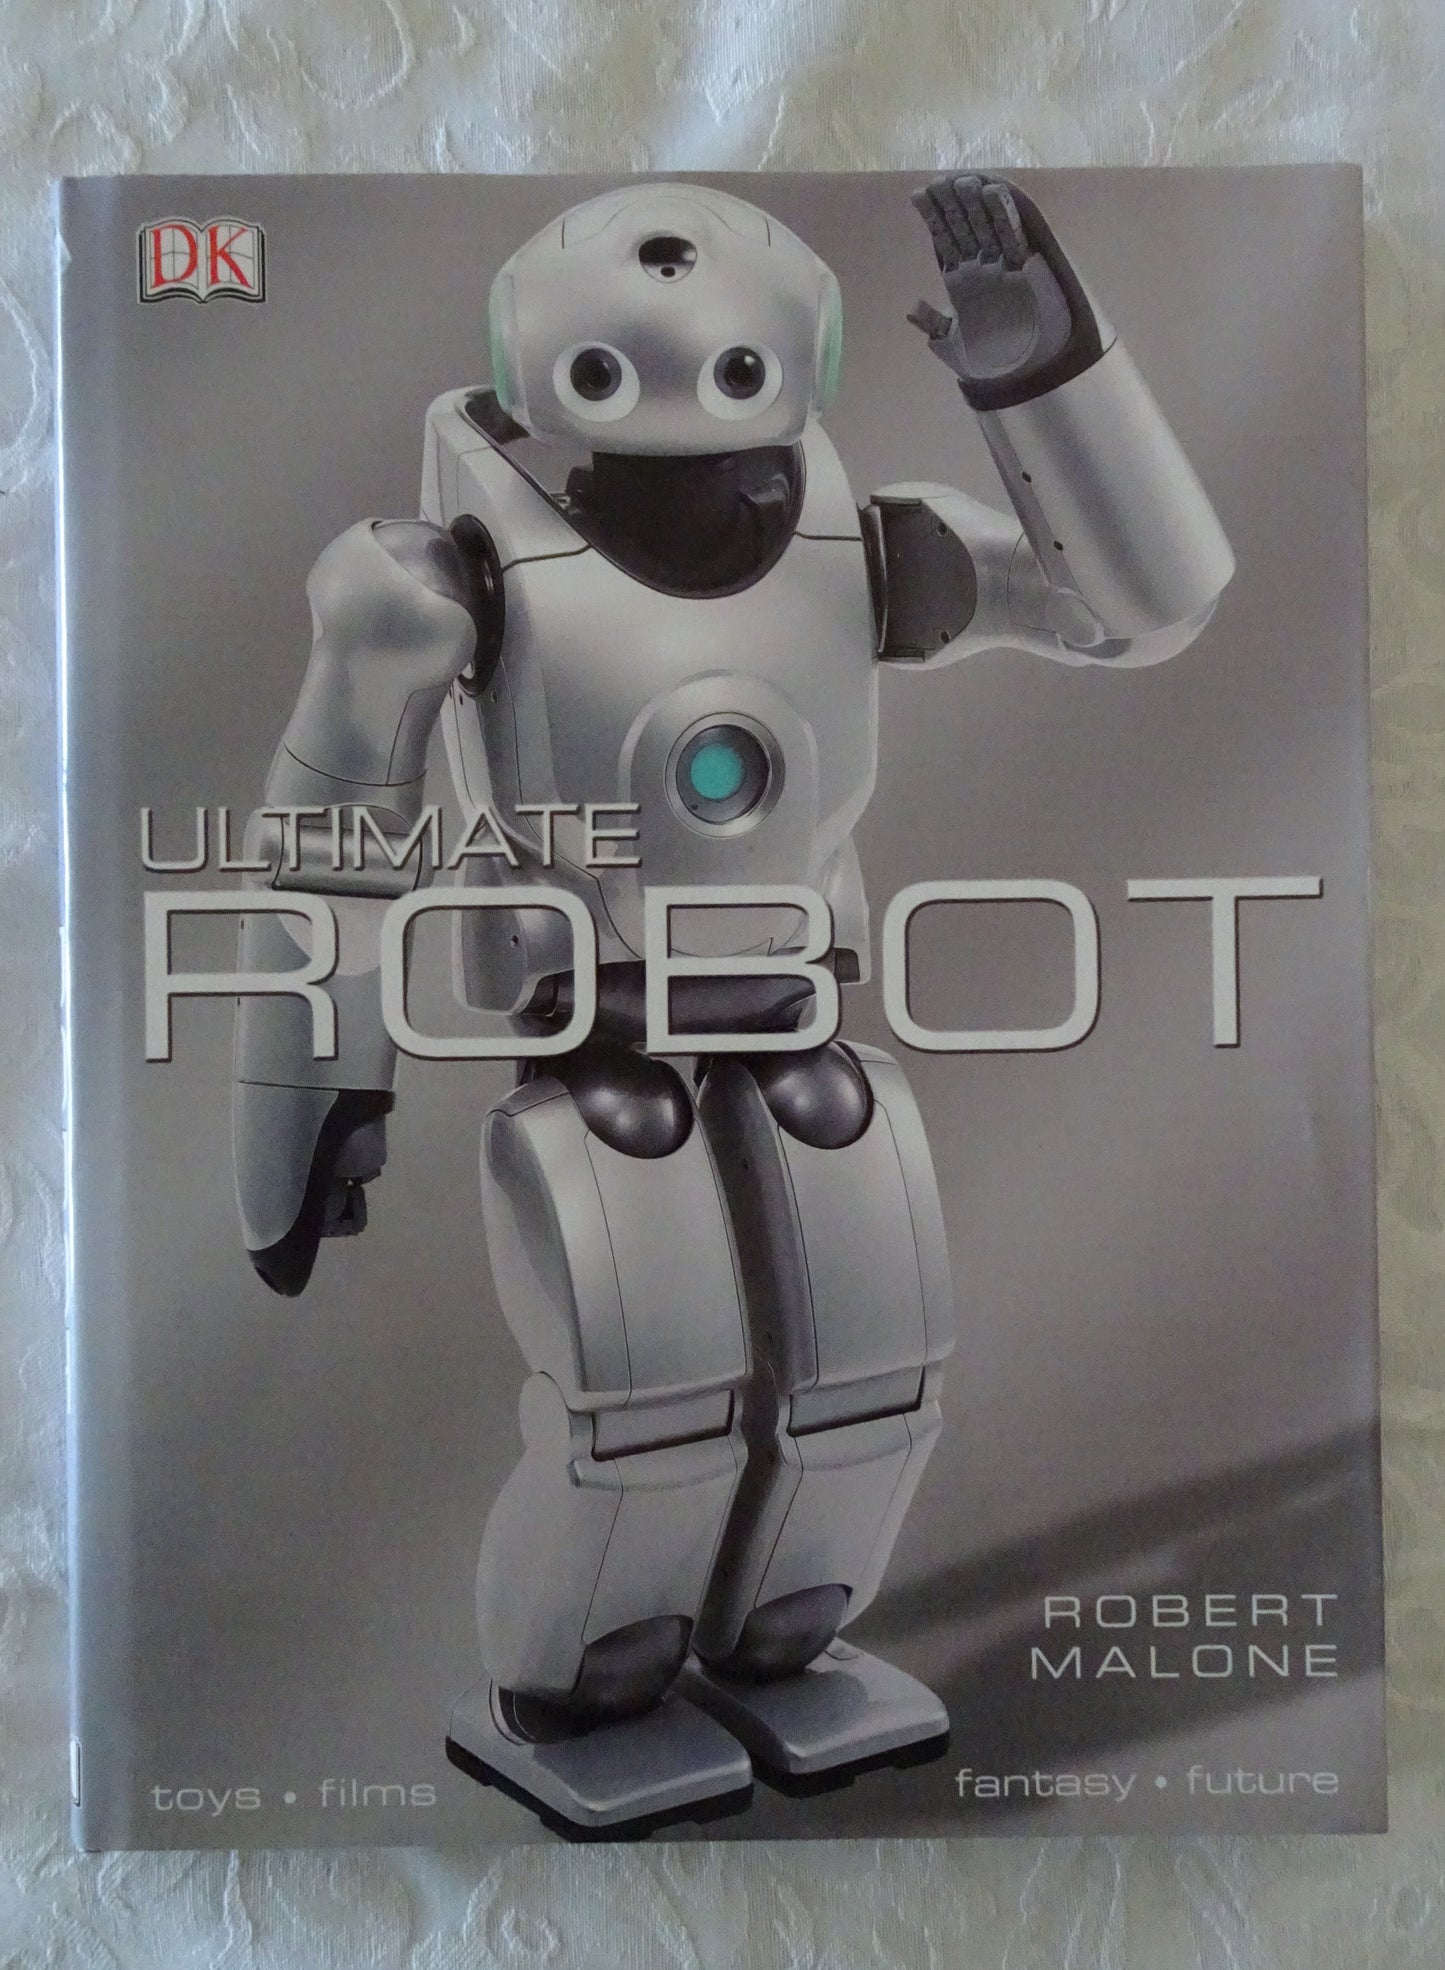 Ultimate Robot by Robert Malone